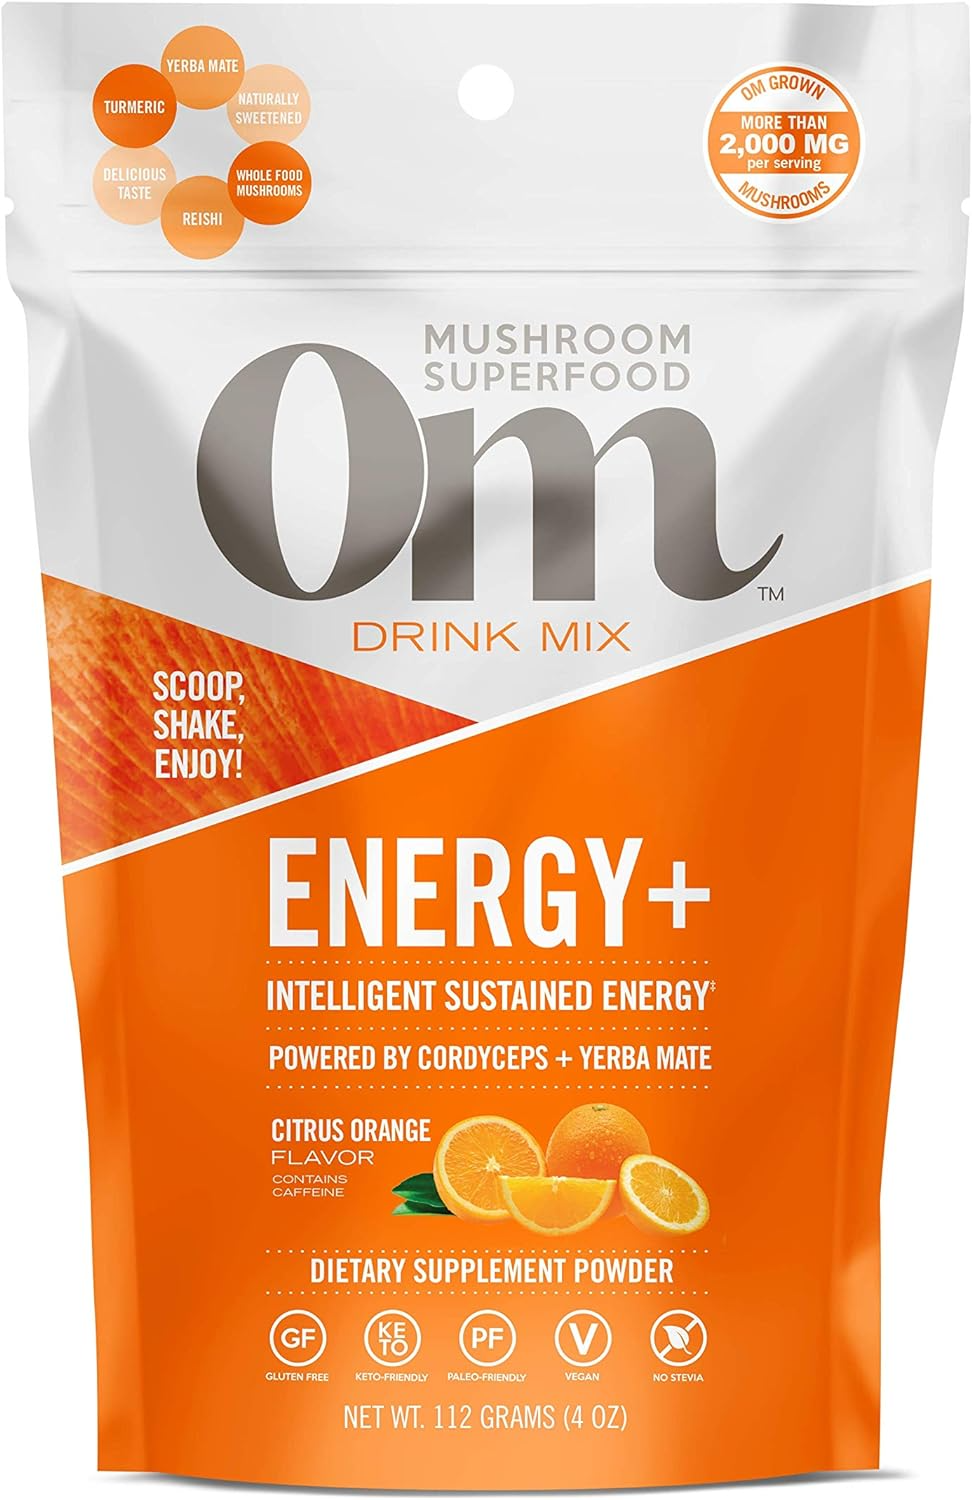 Om Mushroom Superfood Energy Plus Mushroom Powder Drink Mix, Citrus Orange, 4 Ounce, 18 Servings, Mushroom Blend, Cordyceps, Yerba Mate, Tumeric, Vitamin B Complex, Pre-Workout, Immune Supplement